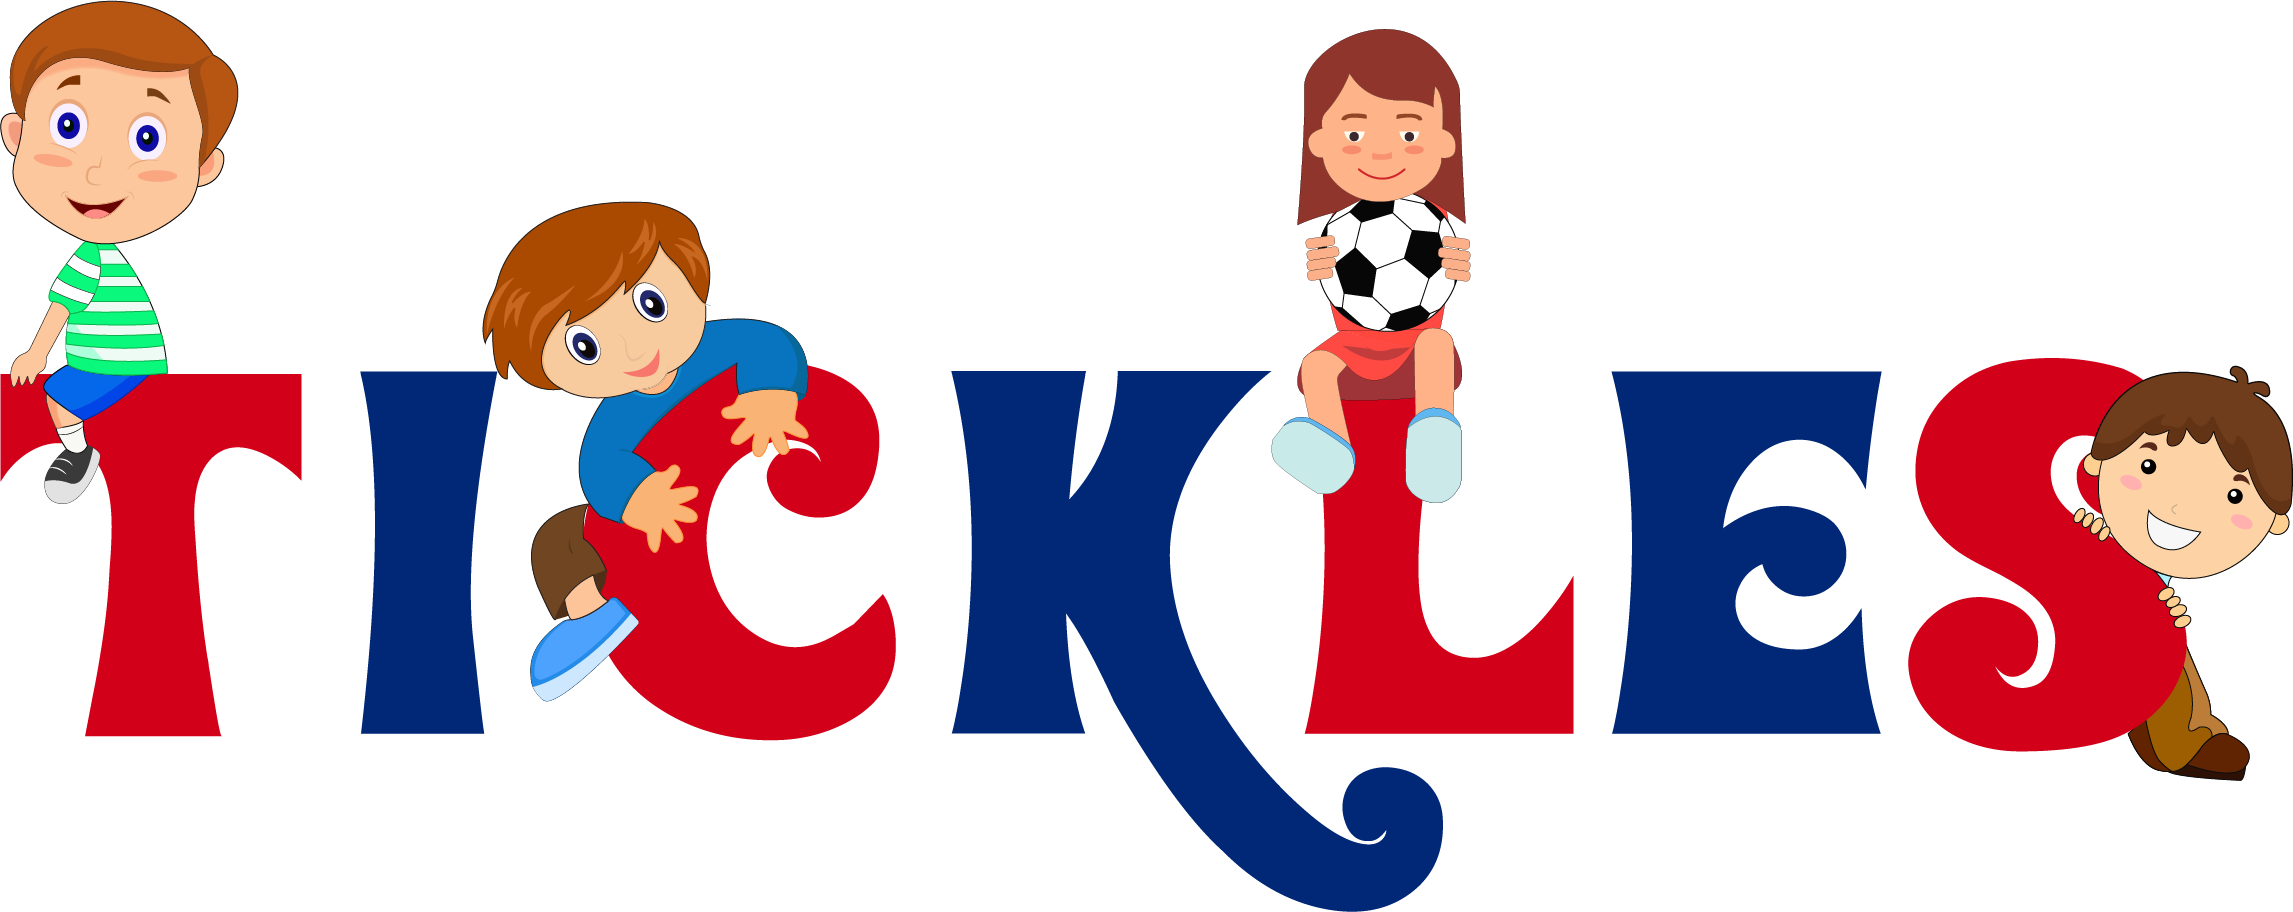 TICKLES Logo